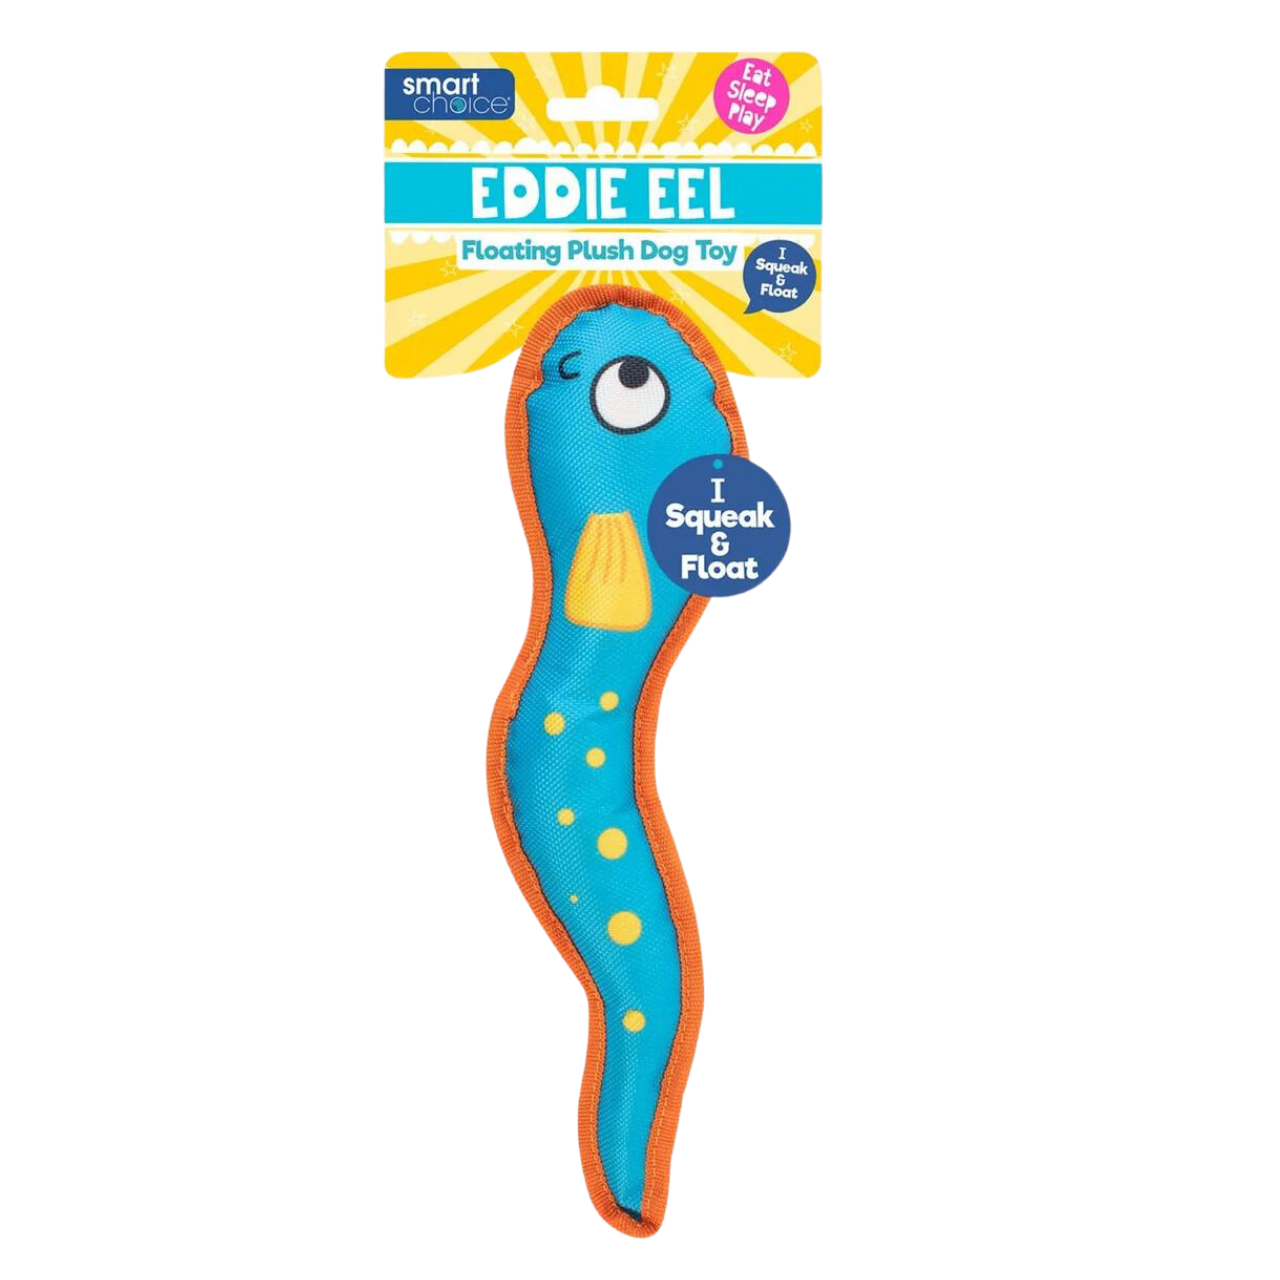 Smart Choice Floating Summer Fish Plush Dog Toy,  Eddie Eel